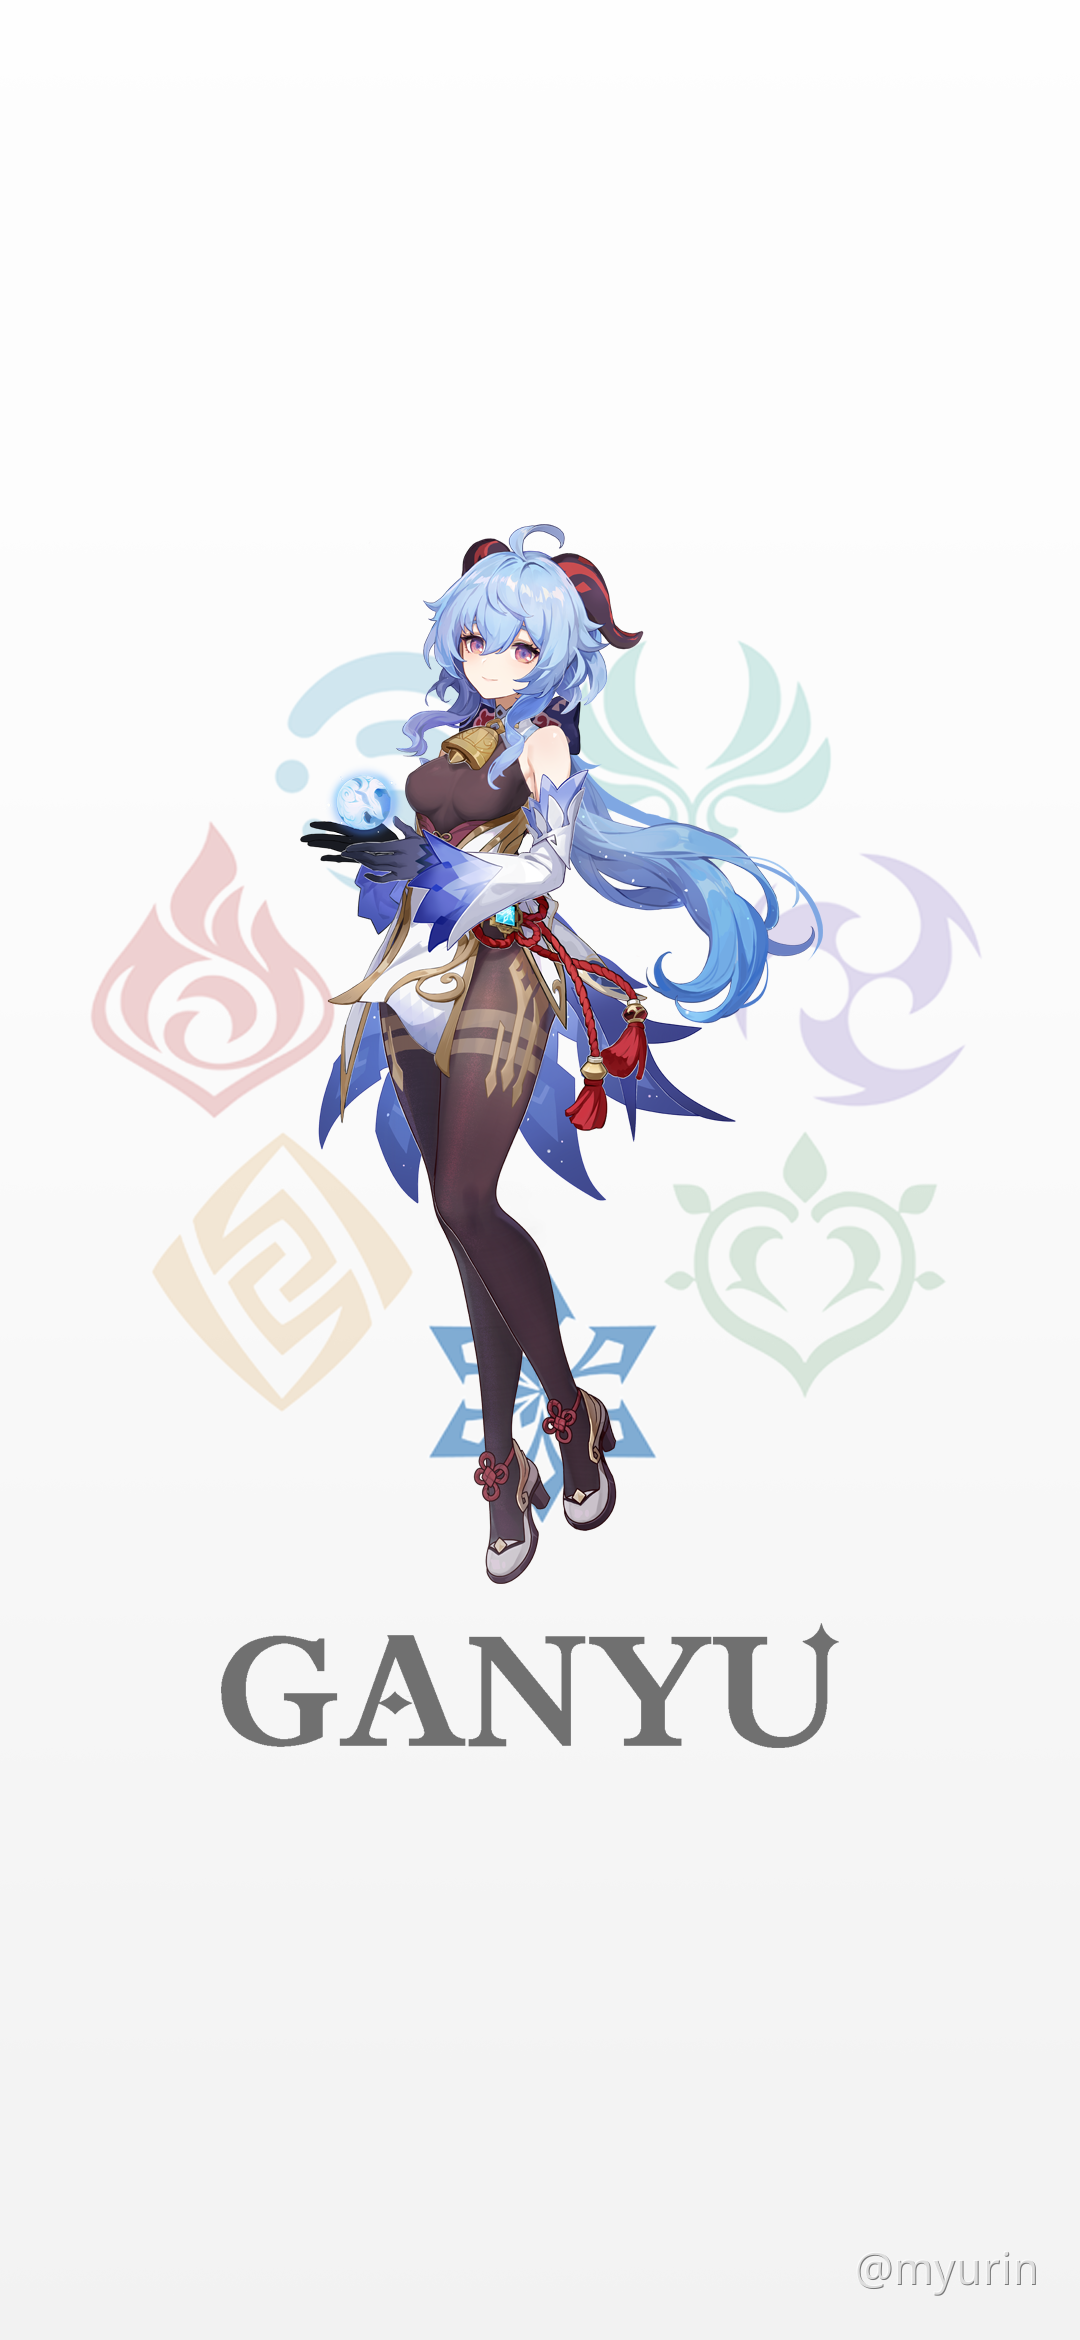 [WALLPAPER] Ganyu - Genshin Impact - Official Community